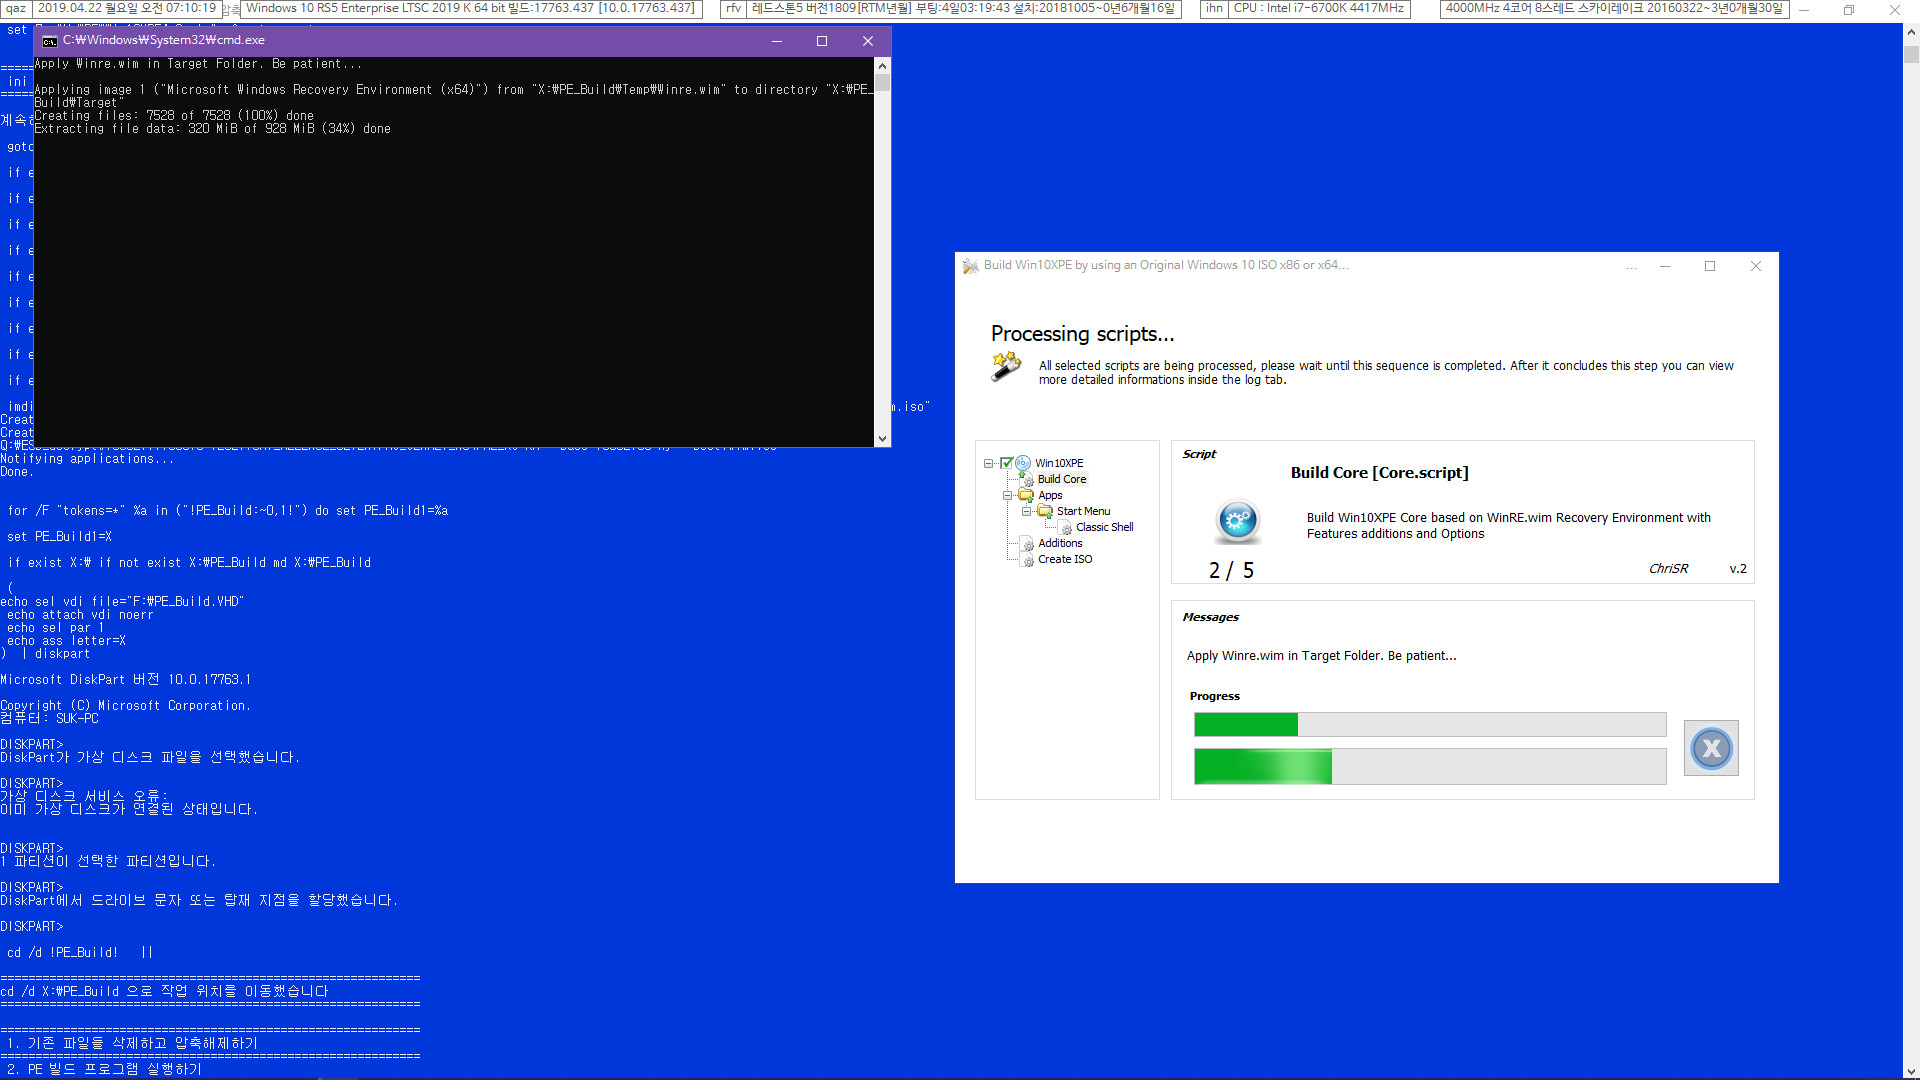 Windows 10 버전 1903, 코드네임 19H1, 18362.1 빌드에 18362.53 누적 업데이트를 install.wim과 winre.wim 에도 통합한 경우빌드 v4.9 PE 만들기 테스트 [boot.wim은 기존파일] 2019-04-22_071020.jpg